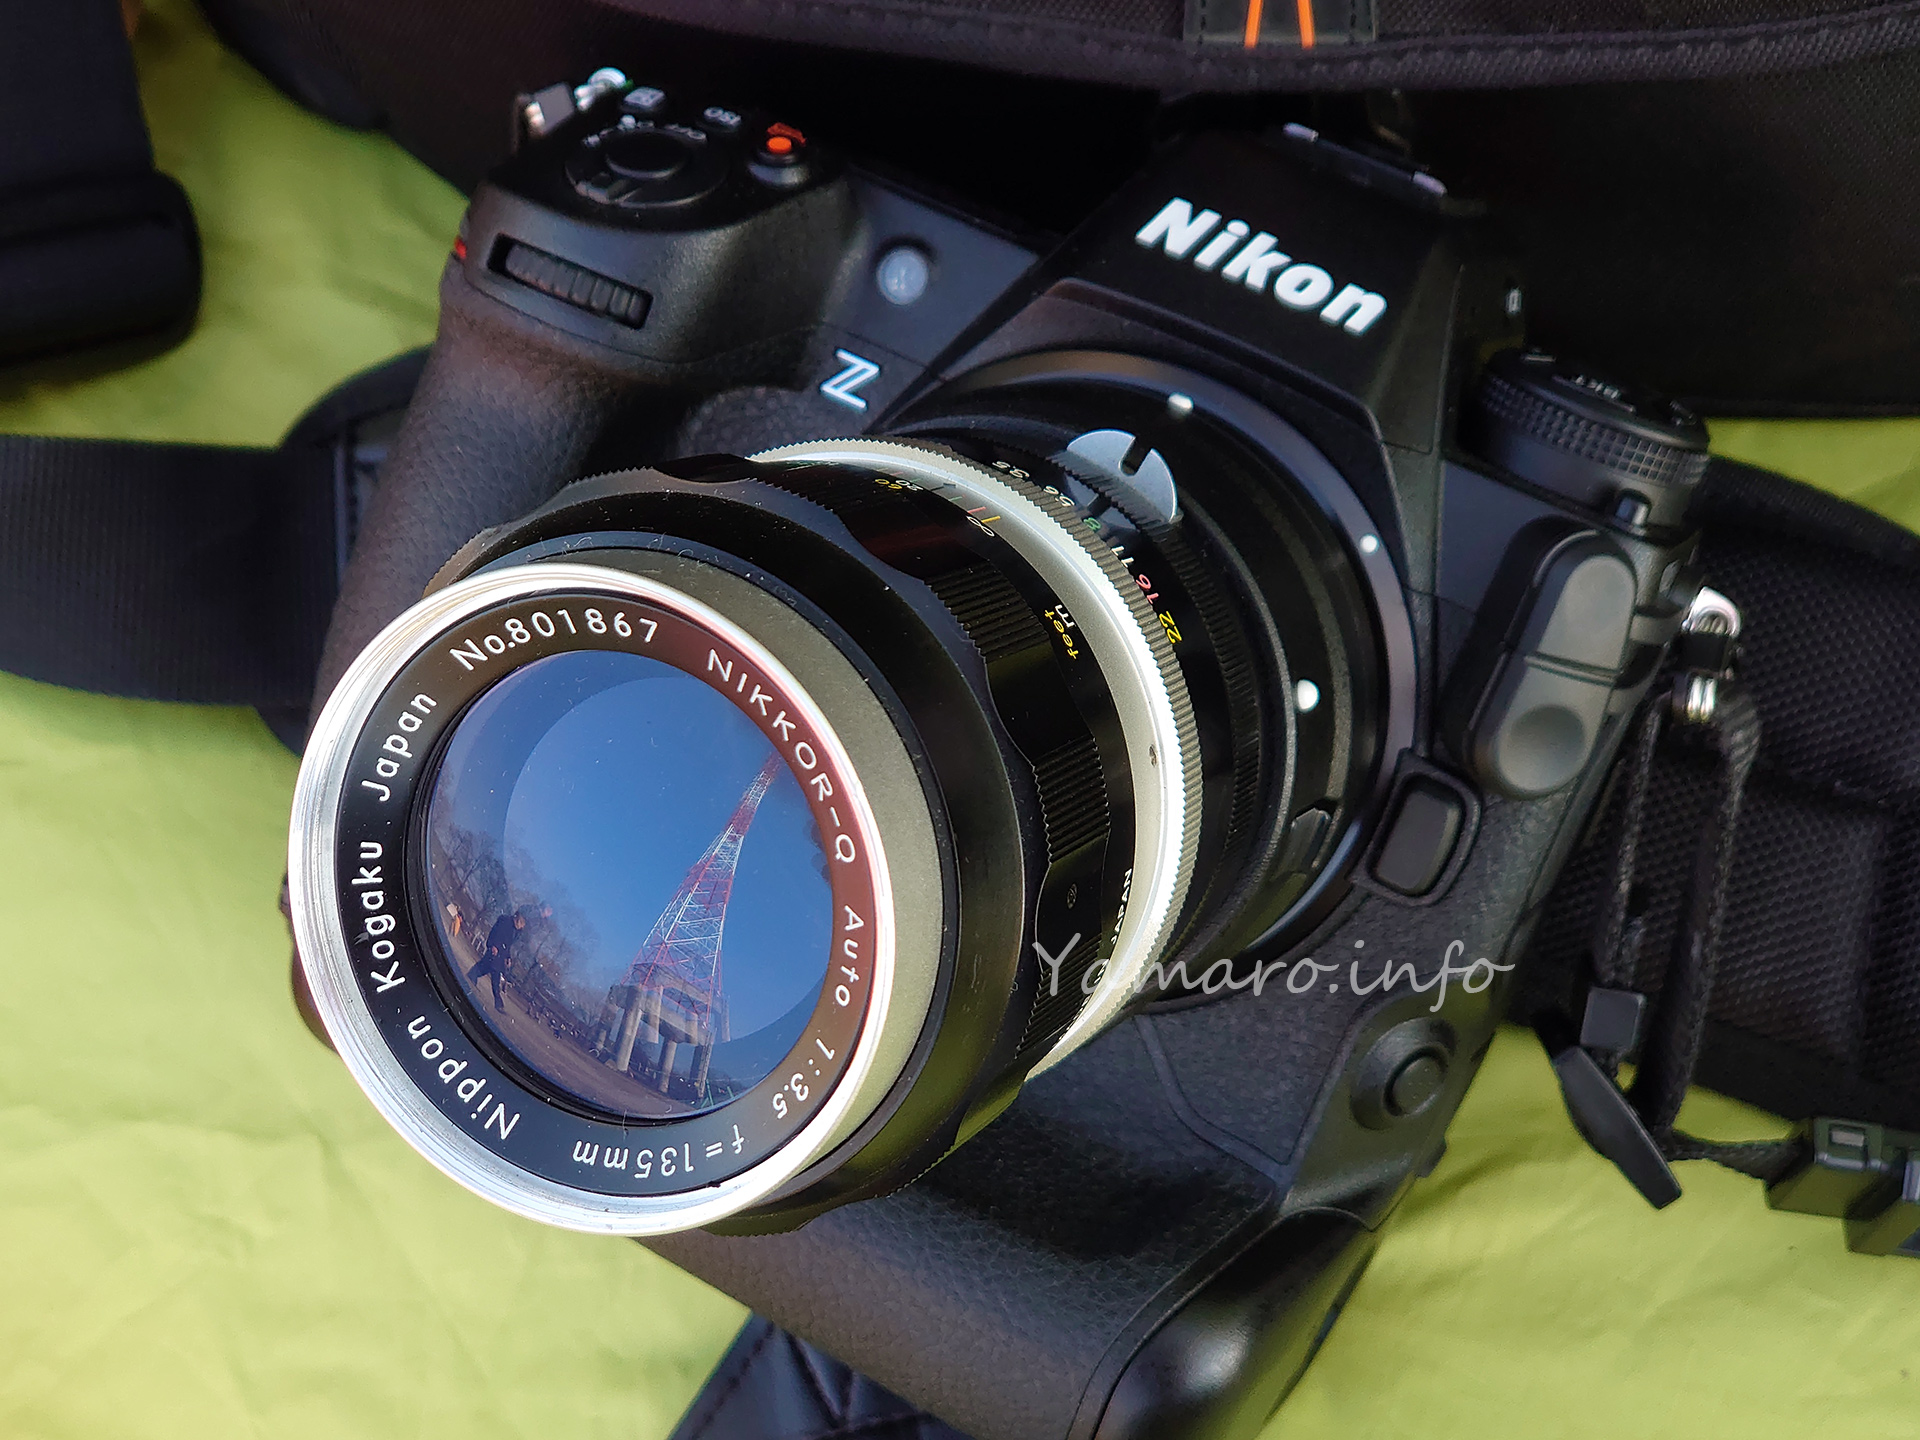 Nikon Z 9 + NIKKOR-Q Auto 135mm F3.5 - Blog@yamaro.info